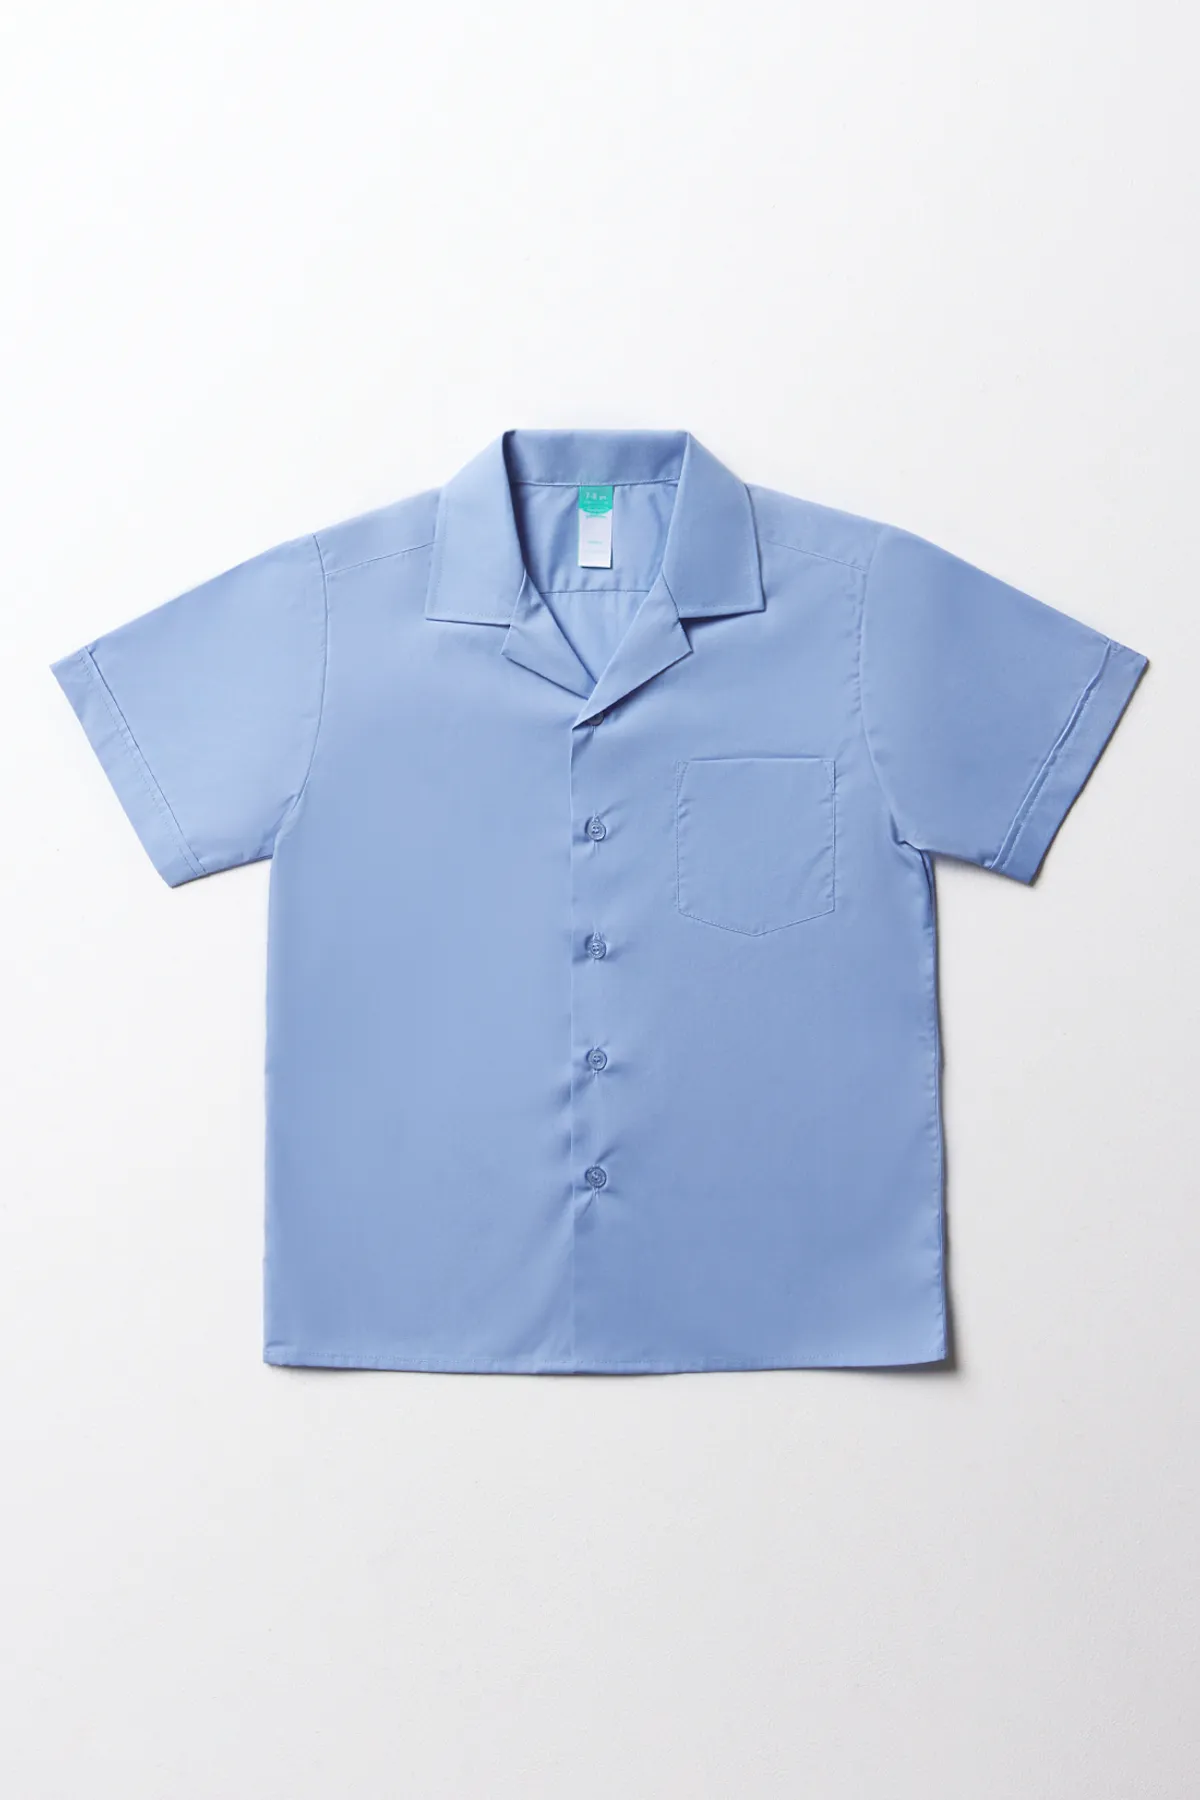 Unisex short sleeve collar shirt white - Kids's School Clothes